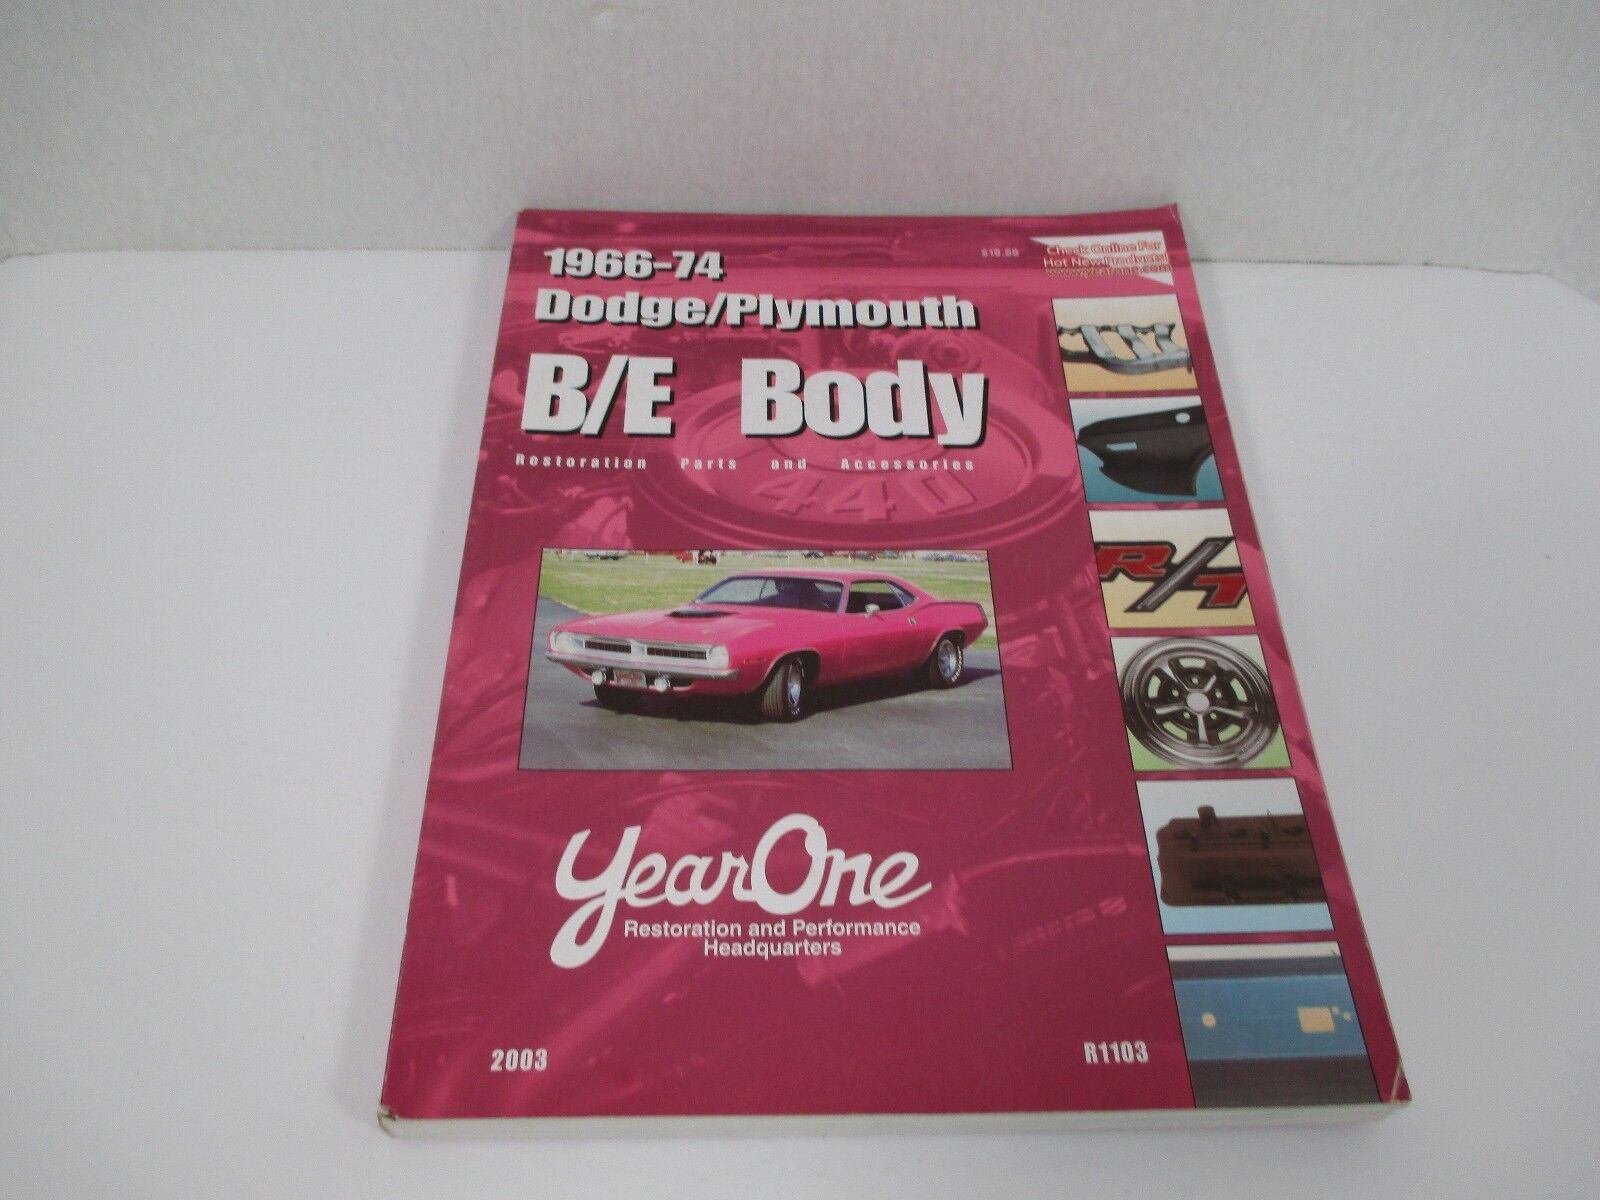 2003 YearOne Restoration Parts & Accessories for 1966-74 Dodge Plymouth B/E Body